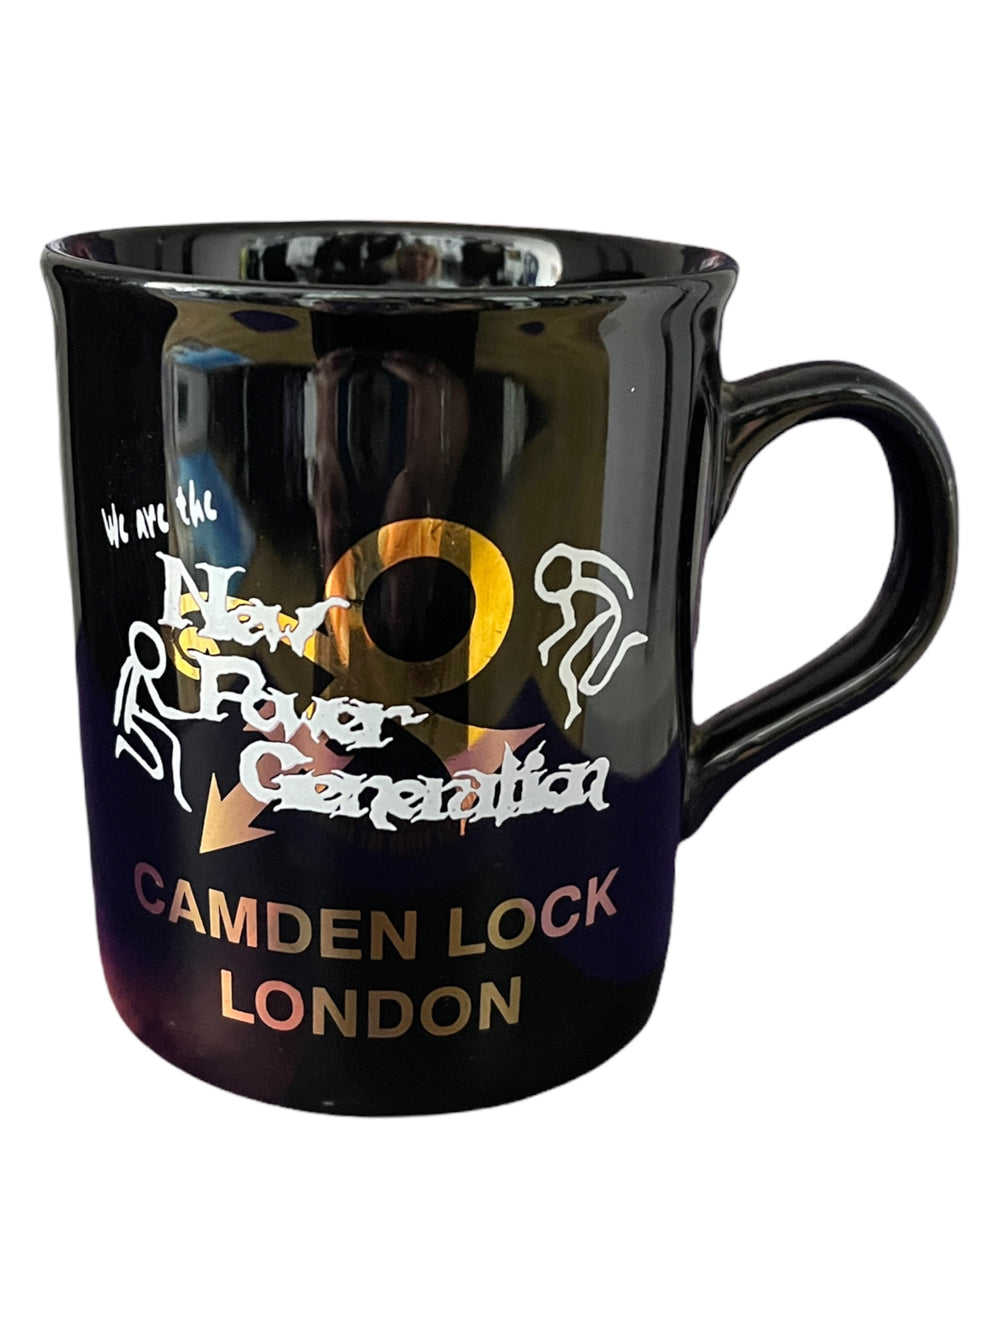 Prince – New Power Generation Camden Lock Official Ceramic Mug From NPG Store